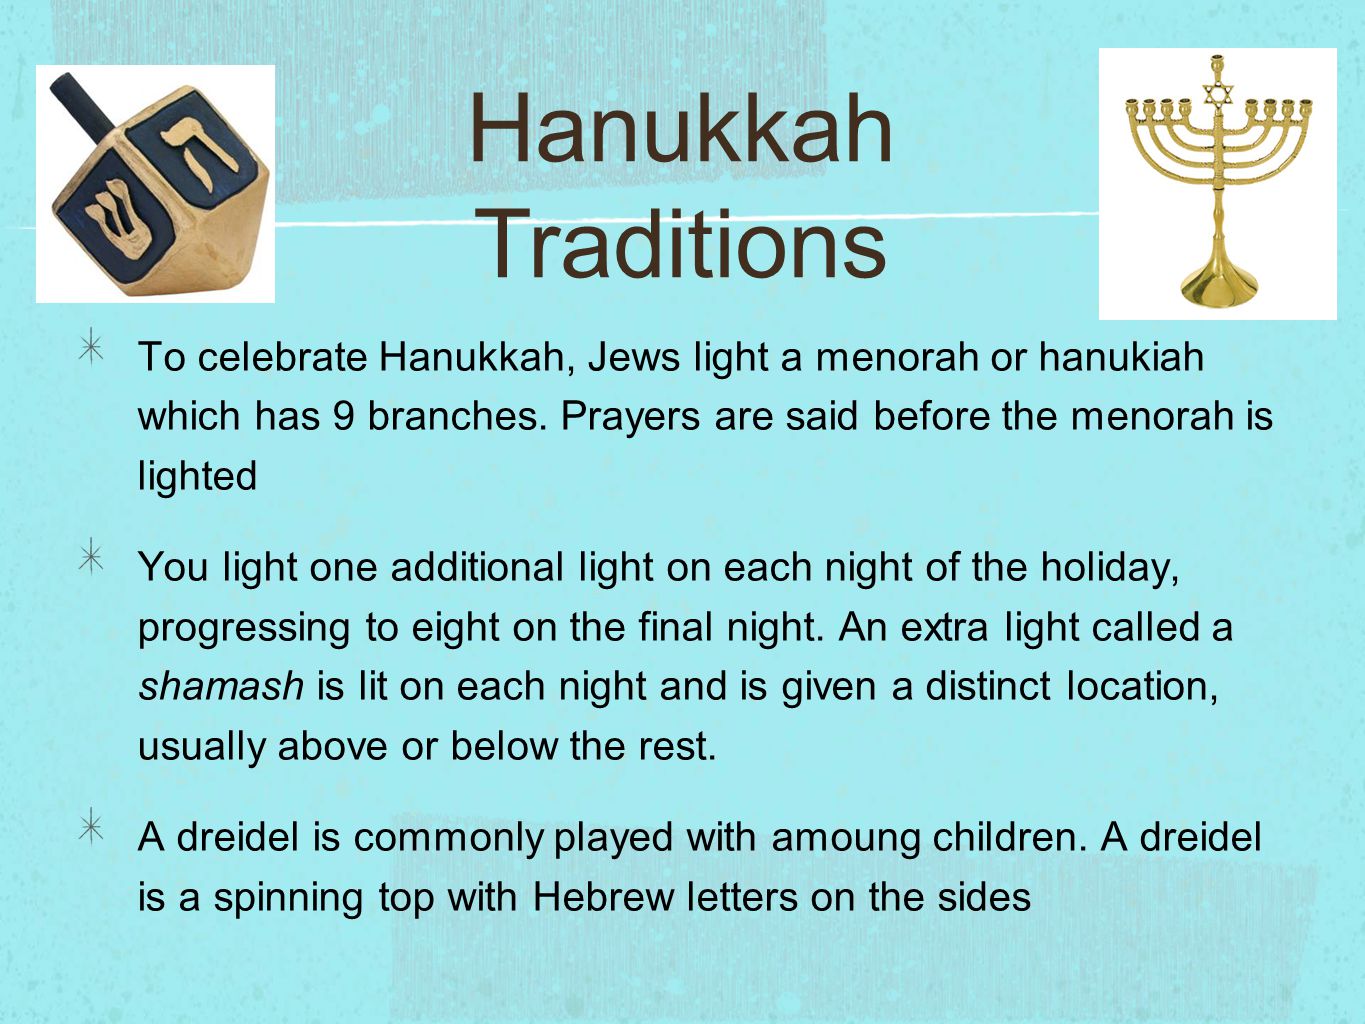 To celebrate Hanukkah, Jews light a menorah or hanukiah which has 9 branches.